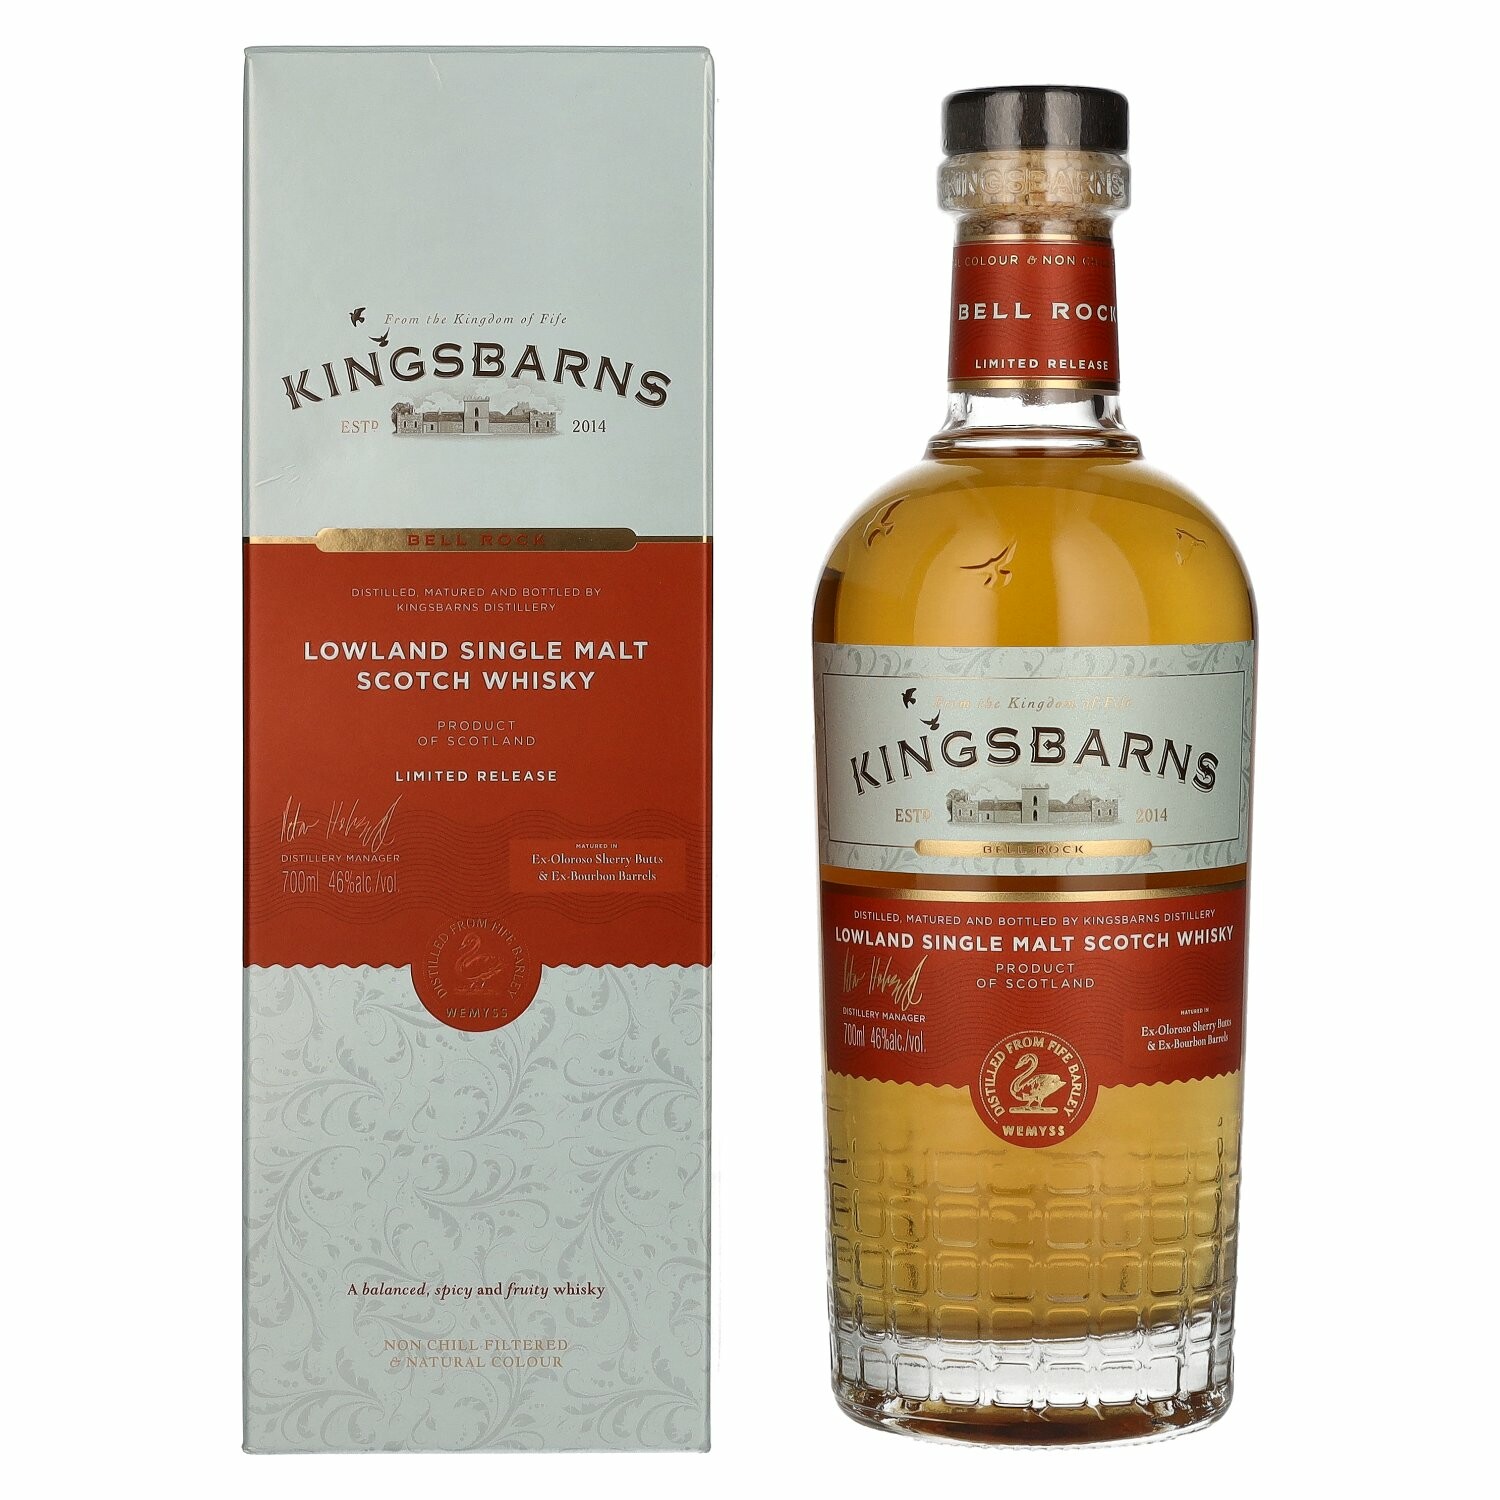 Kingsbarns BELL ROCK Lowland Single Malt Scotch Whisky 46% Vol. 0,7l in Giftbox